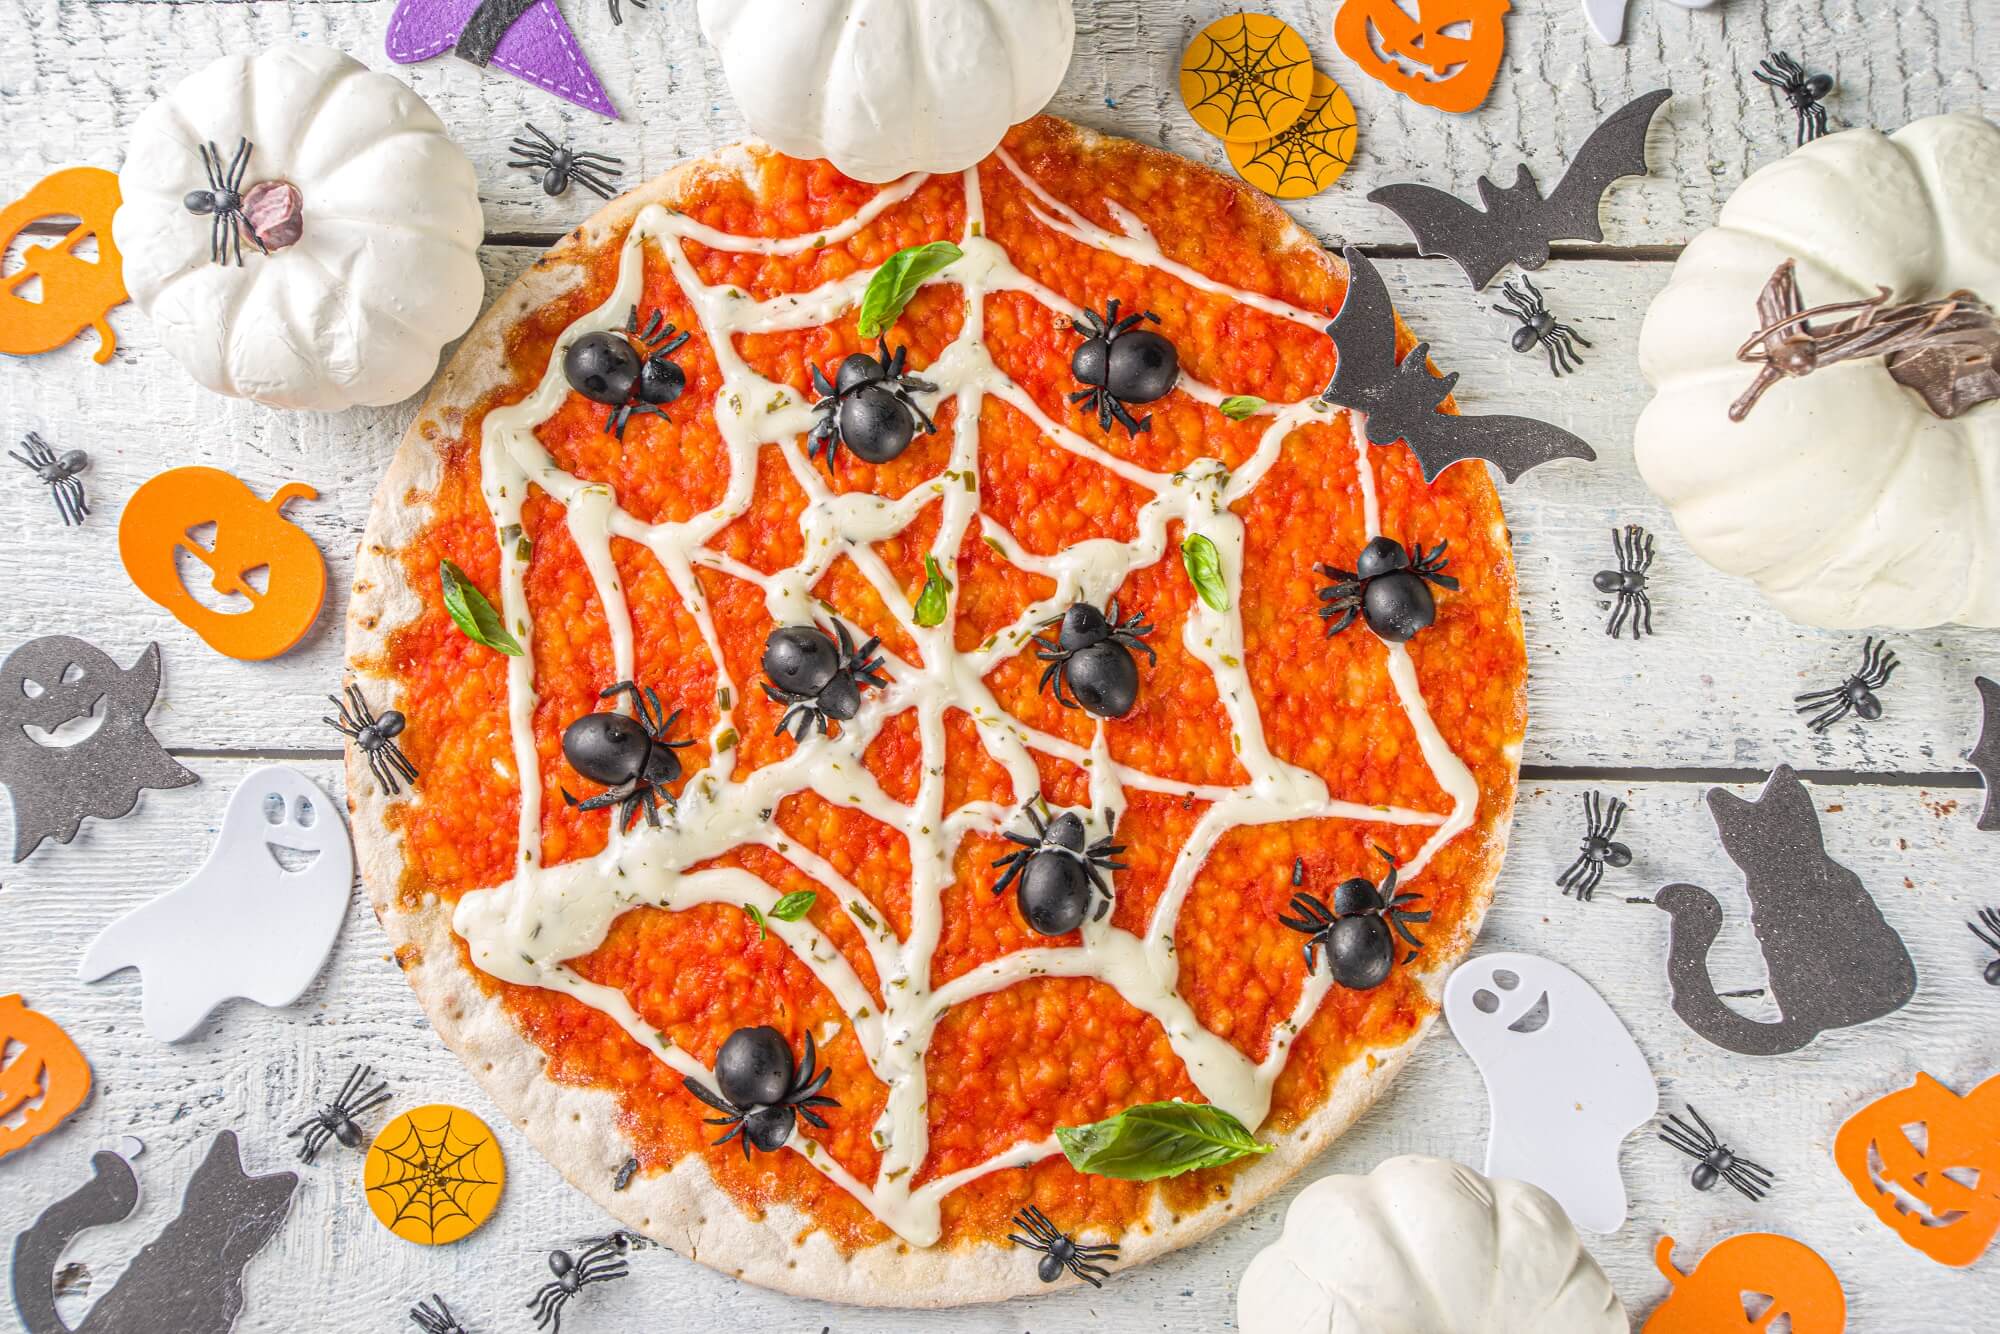 Halloween Pizza Ideas - Saucy Spiderweb Pizza - Halloween Party Food Ideas